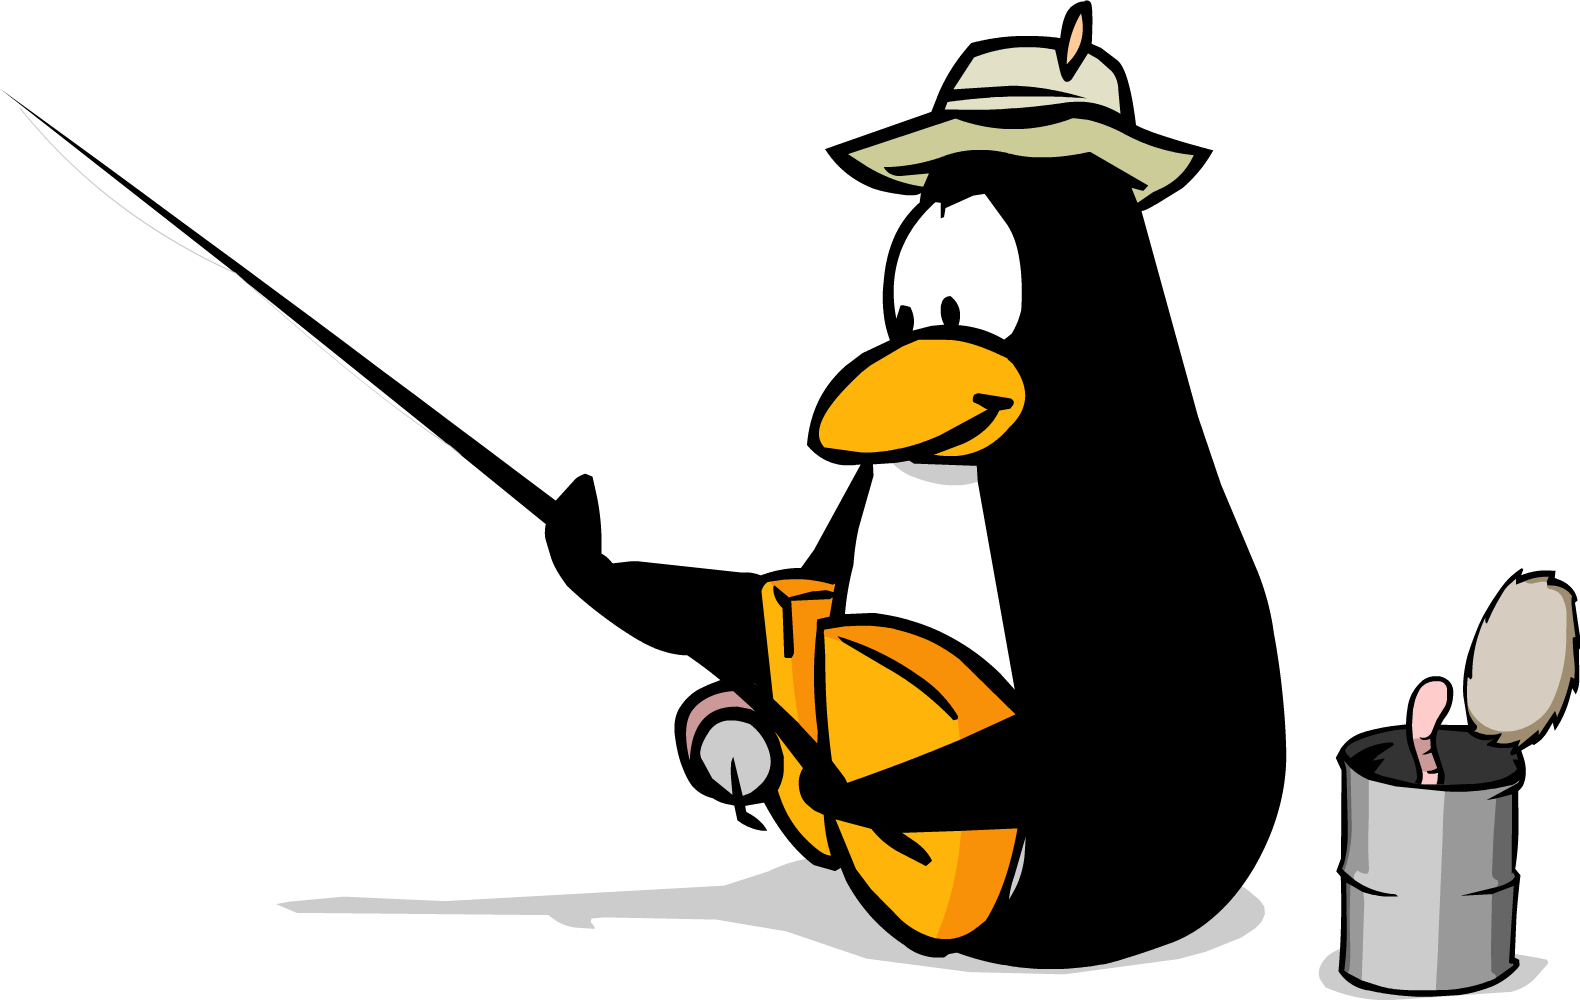 A Cartoon Of A Penguin Holding A Fishing Pole